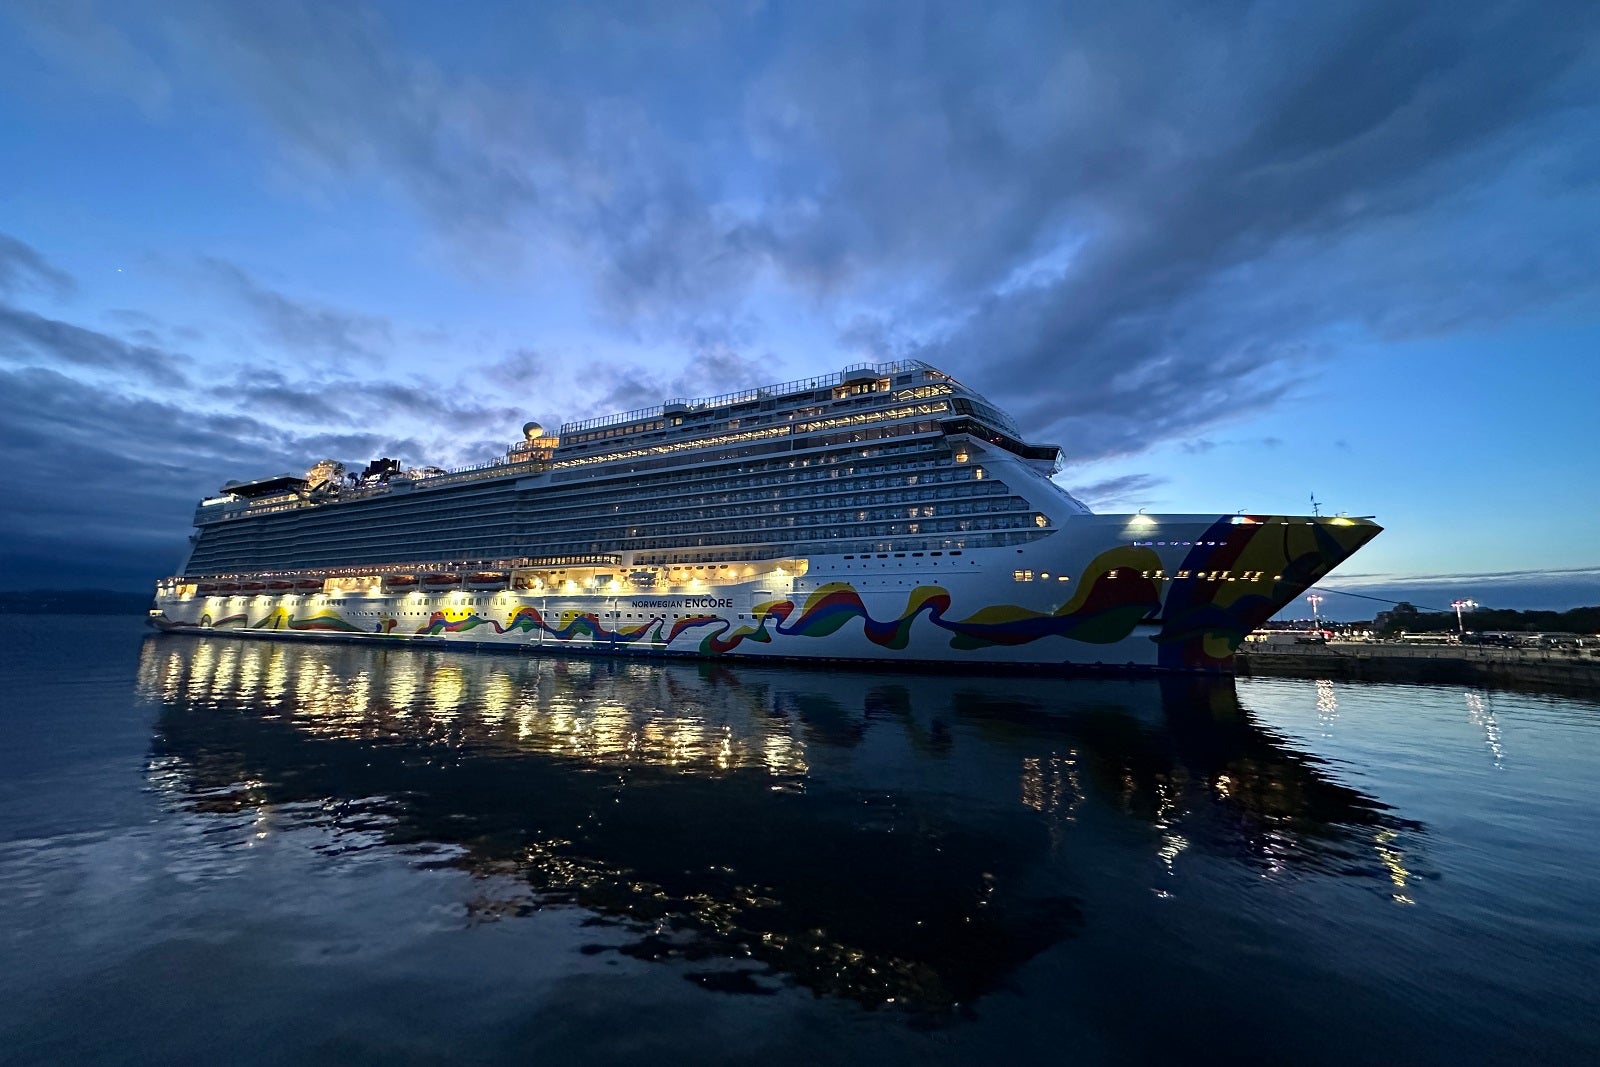 norwegian cruise encore alaska reviews